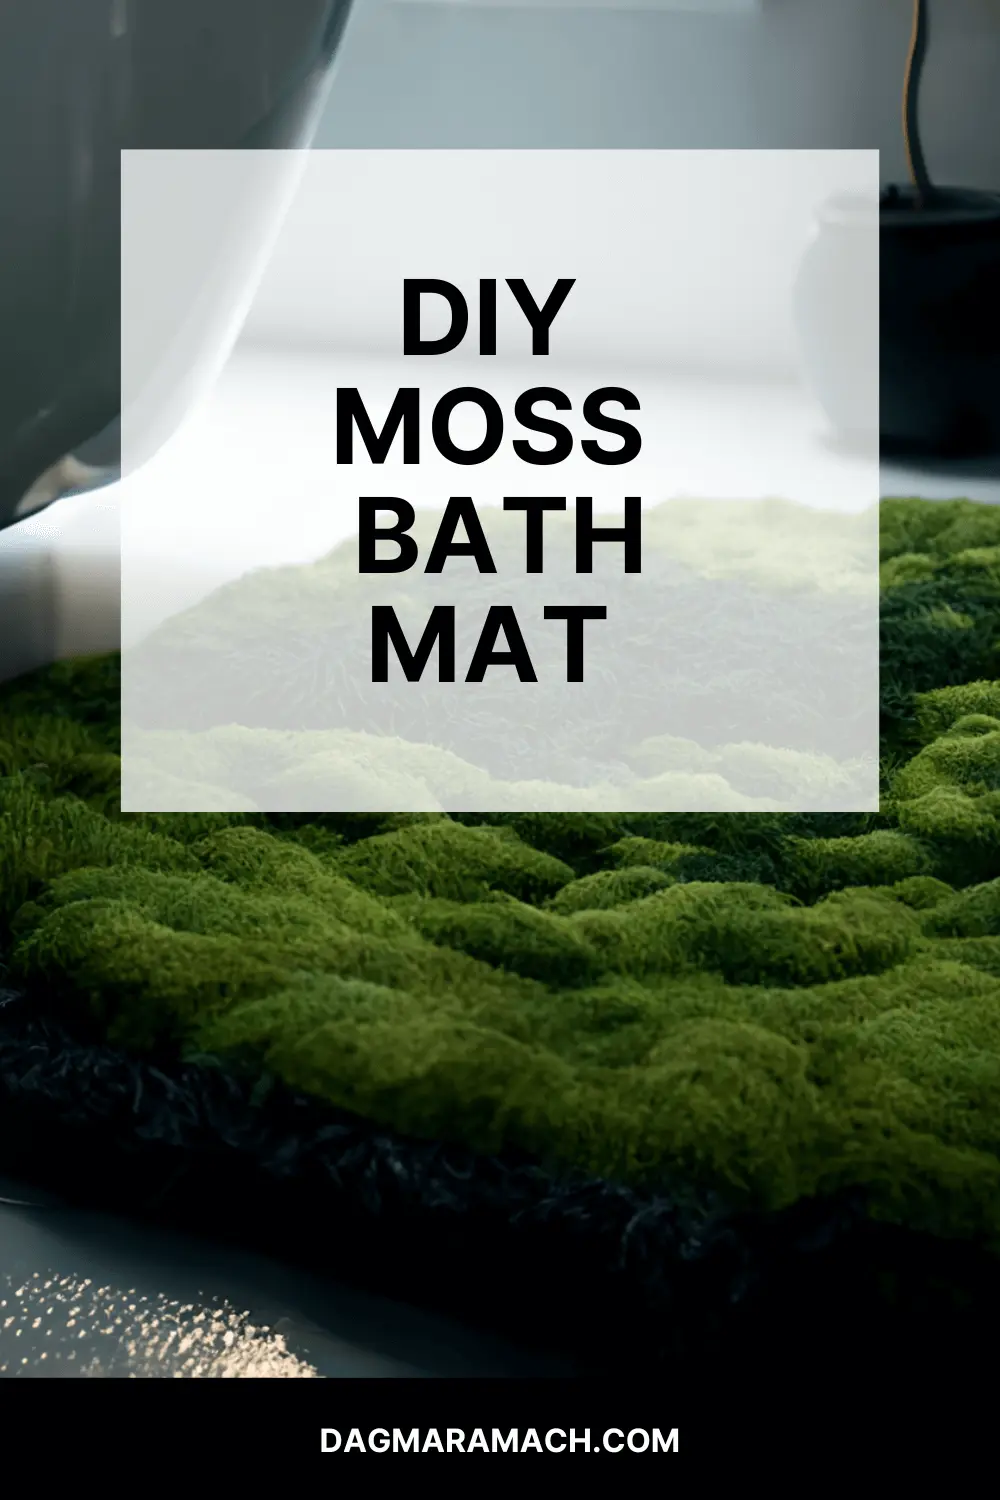 Moss Bath Mat Next To White Bathtub with the text DIY Moss Bath Mat overlaid